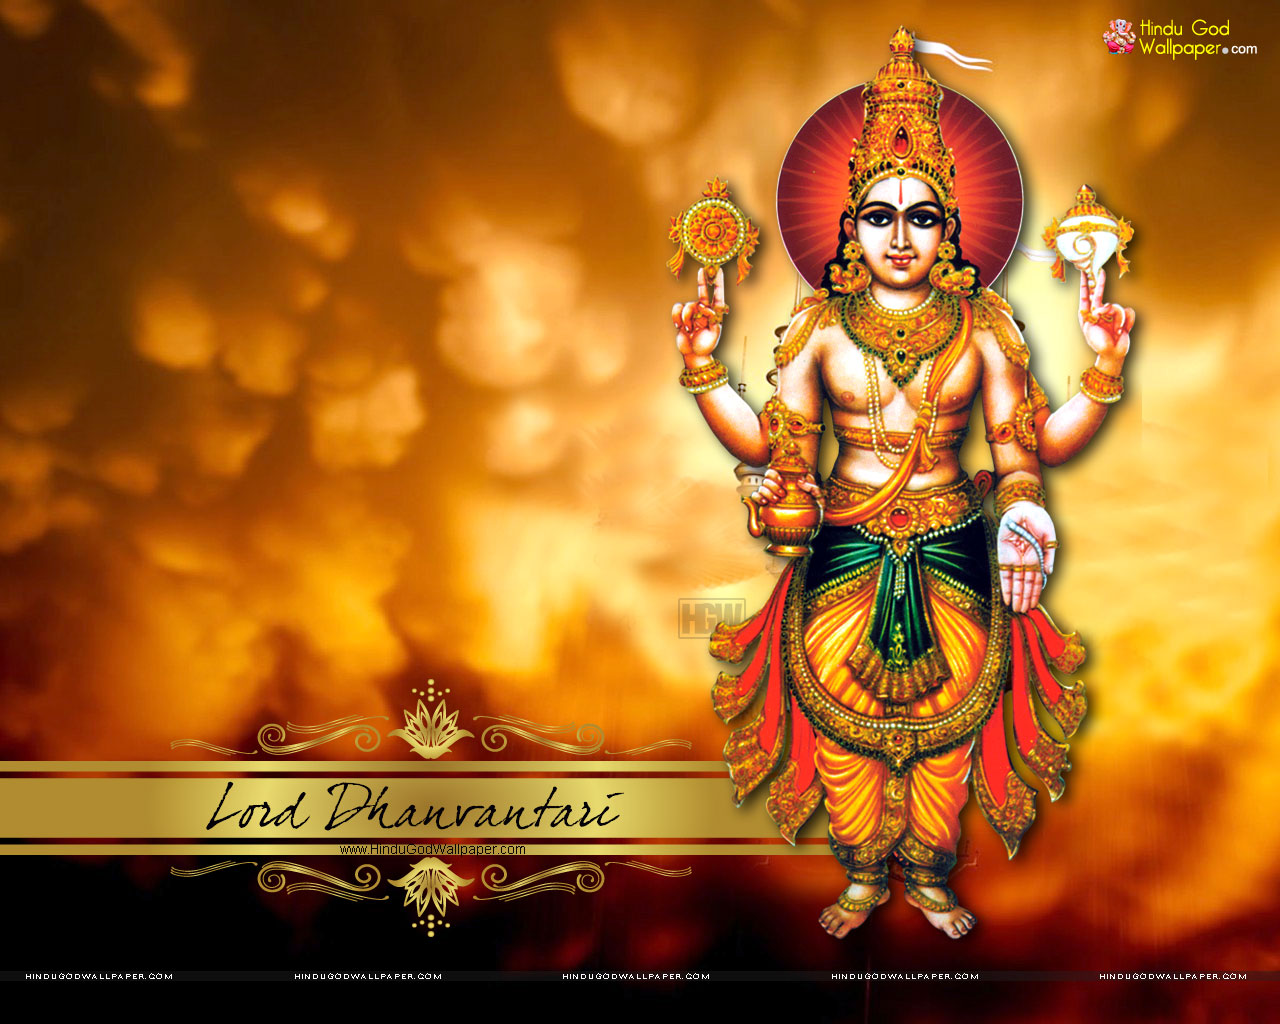 Hindu gods and goddesses wallpapers free download - danasrhp.top